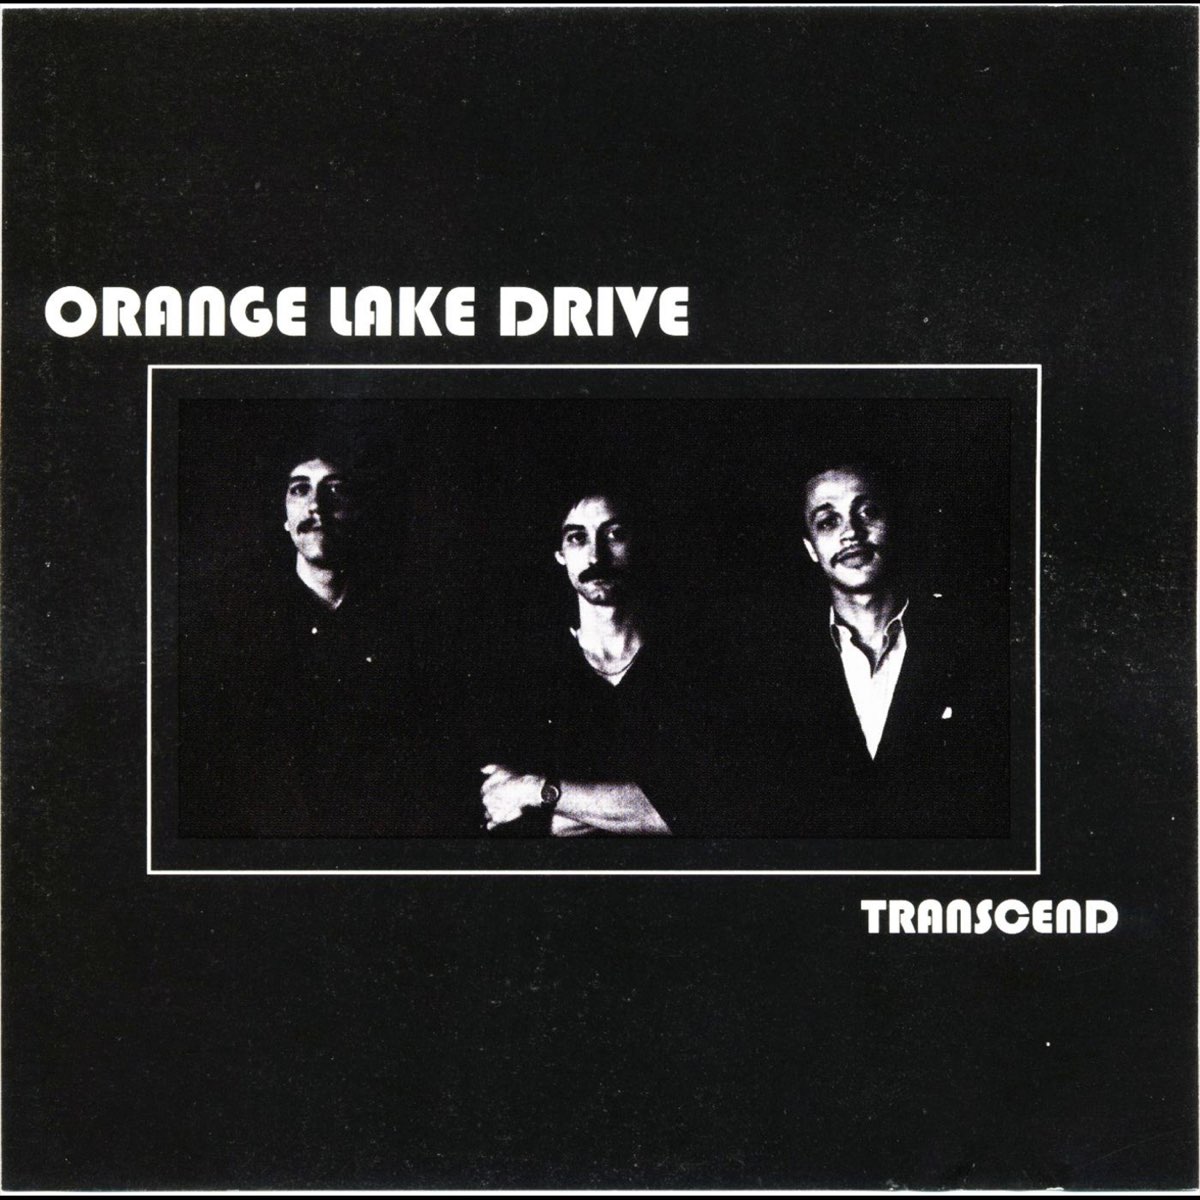 Transcend - Album by Orange Lake Drive - Apple Music